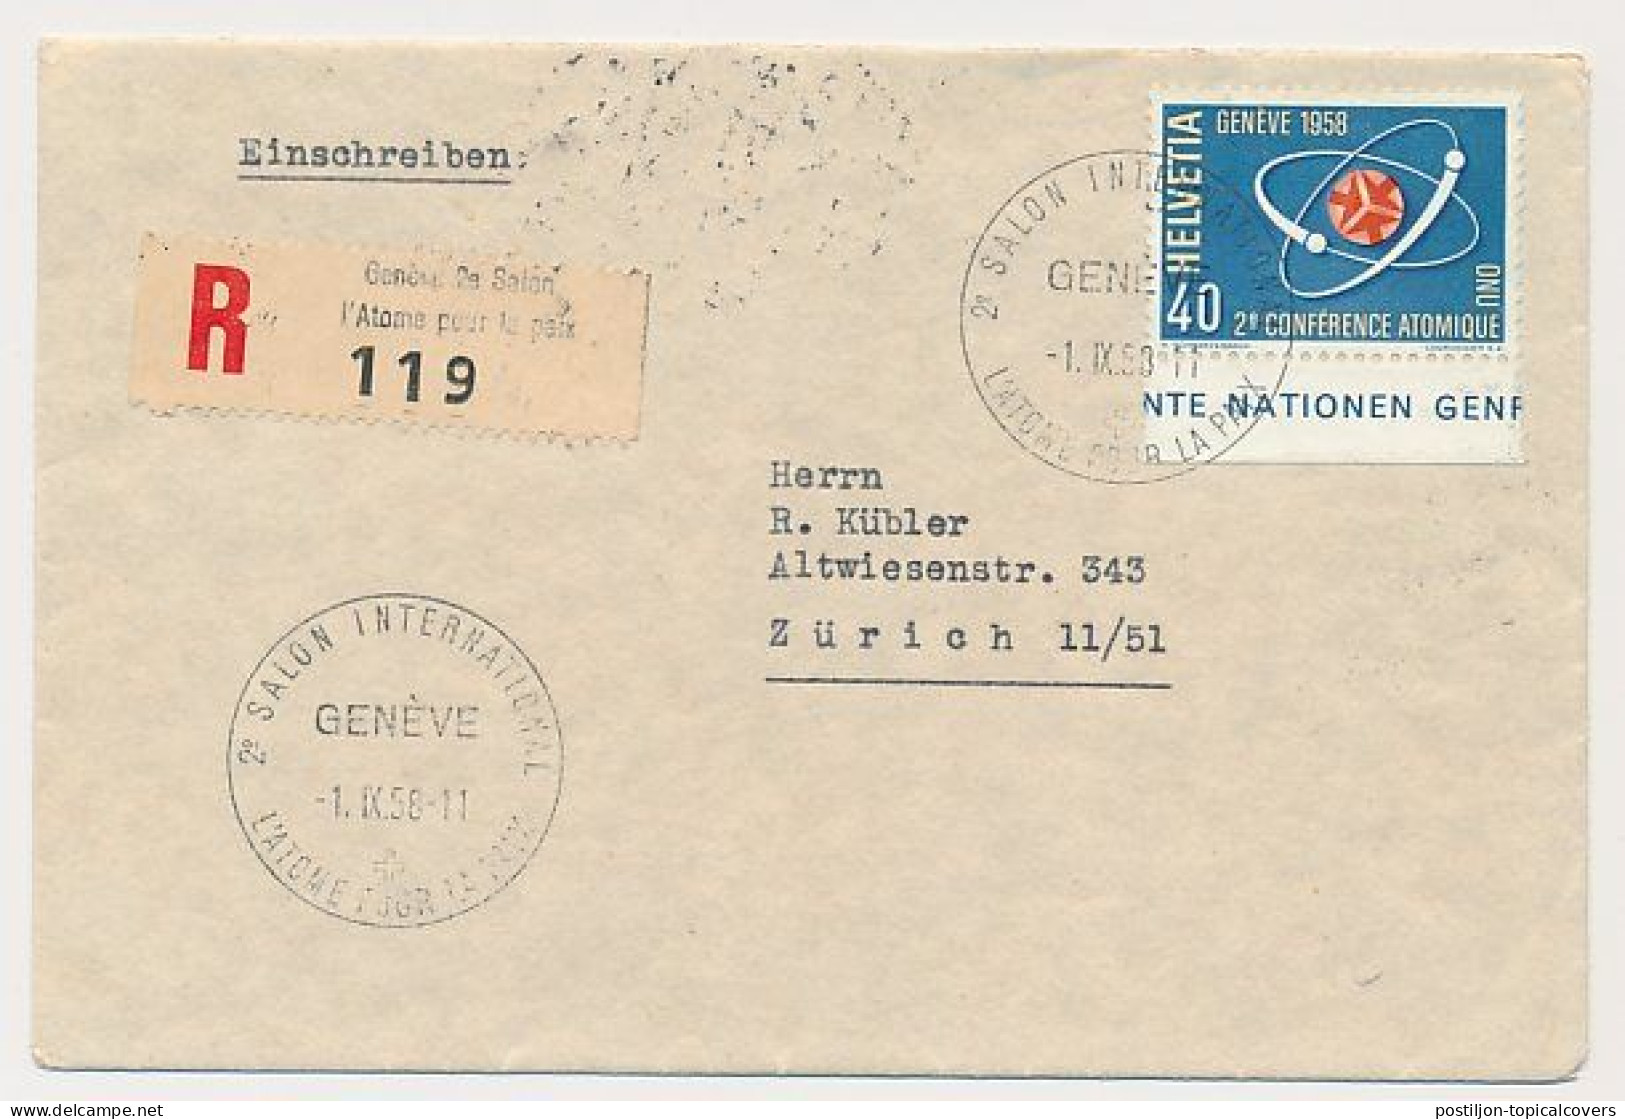 Registered Cover Geneve Switzerland 1958 - L'Atome  Pour La Paix - The Atom For Peace - Atome